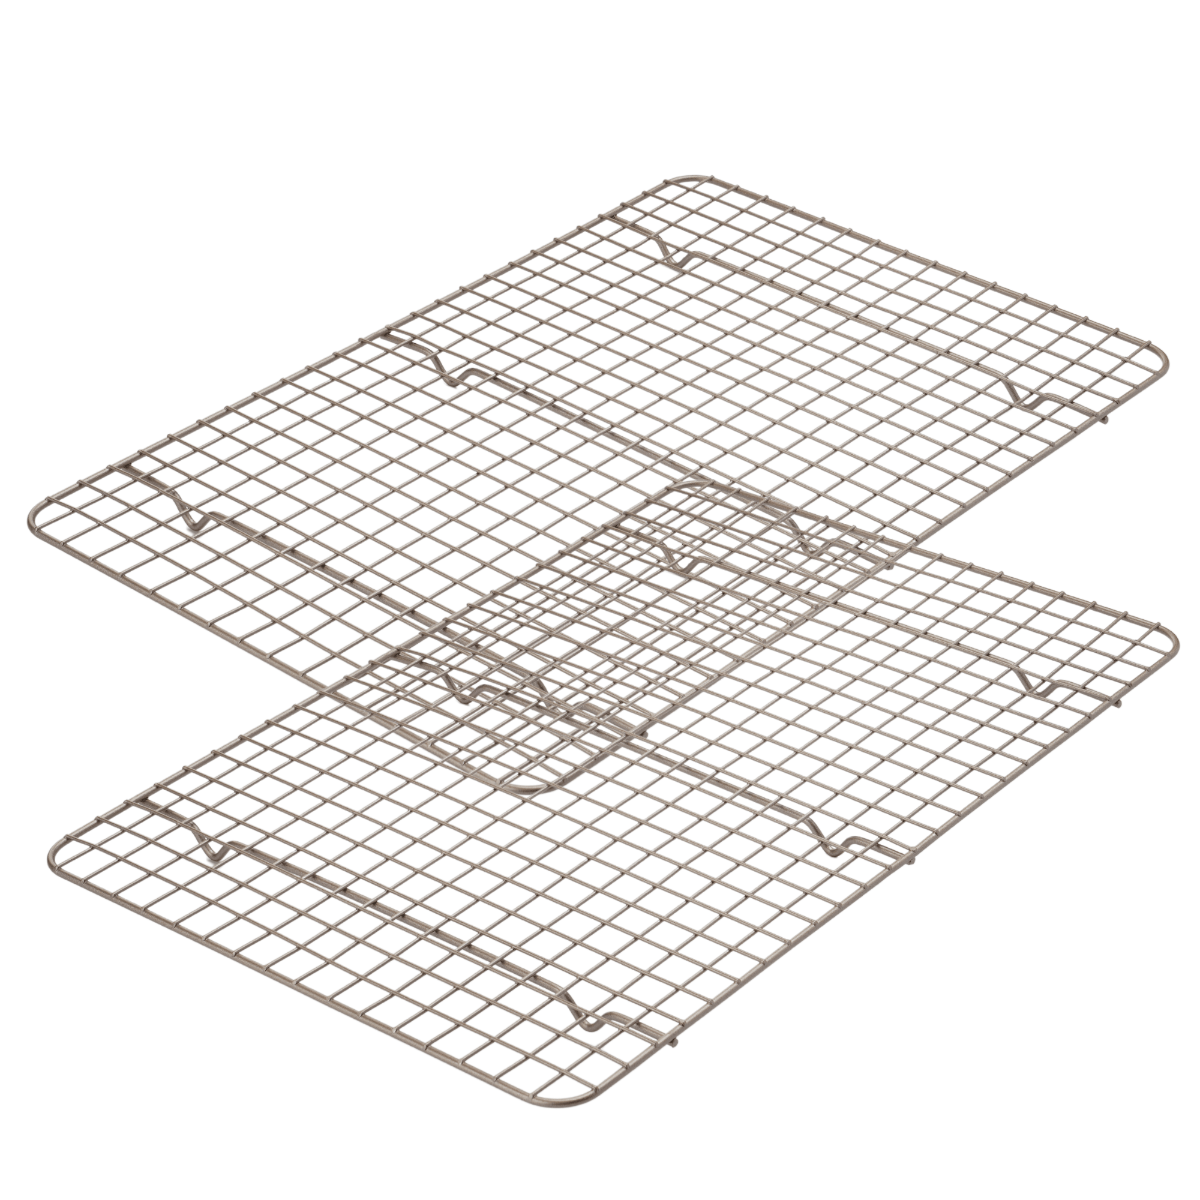 Happon Baking Sheet with Wire Rack Set 9.2 x 6.8 - Single Set